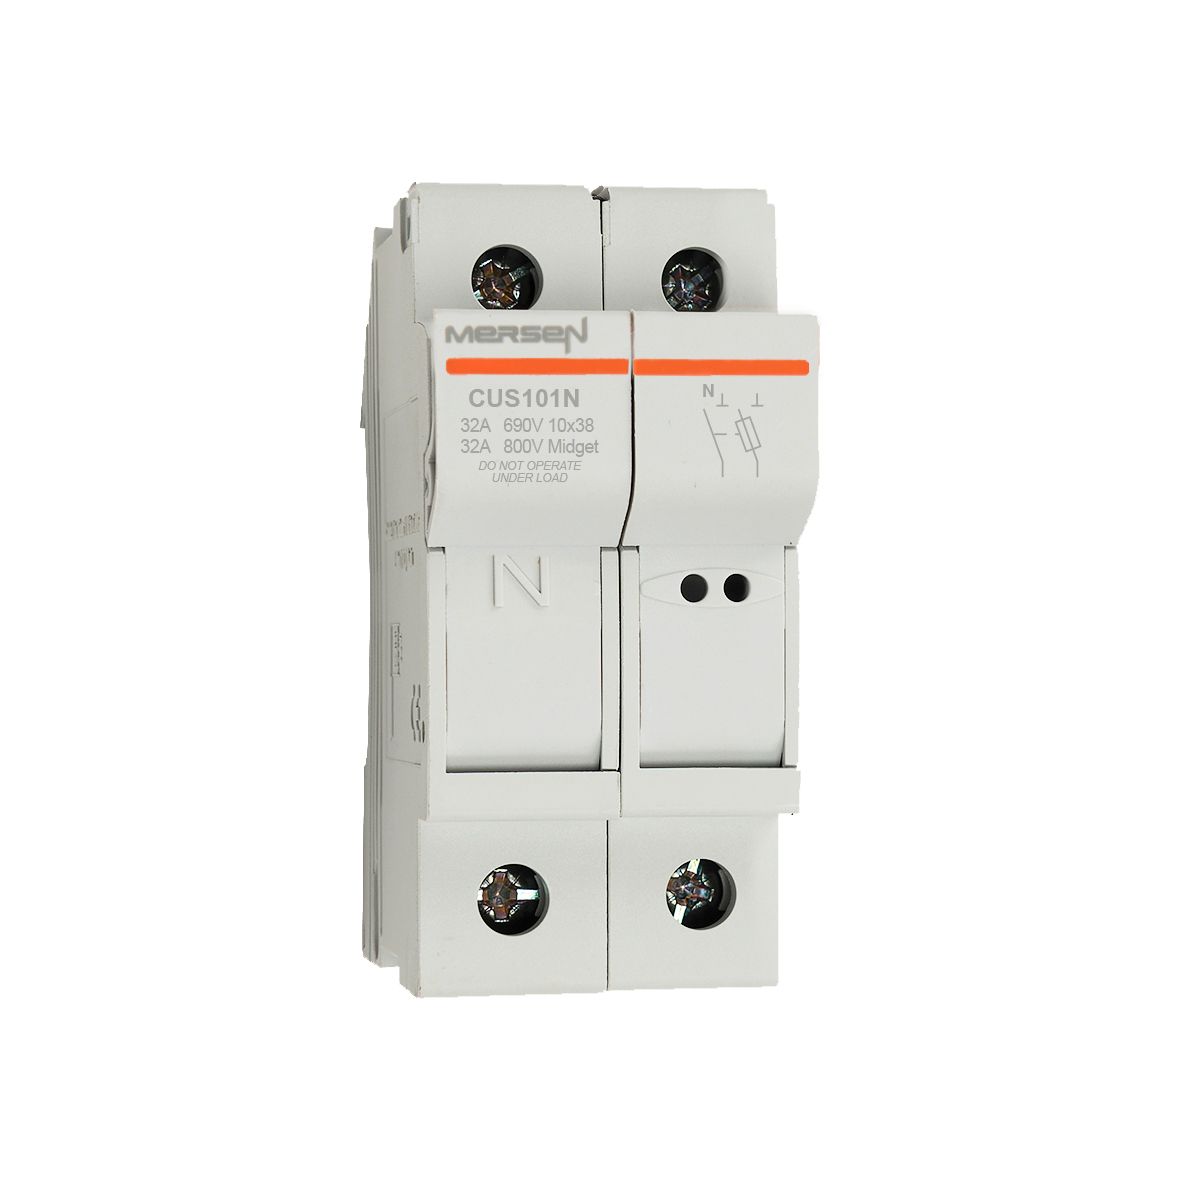 C1062717 - modular fuse holder, UL+IEC, 1P+N,10x38, MIDGET, DIN rail mounting, IP20